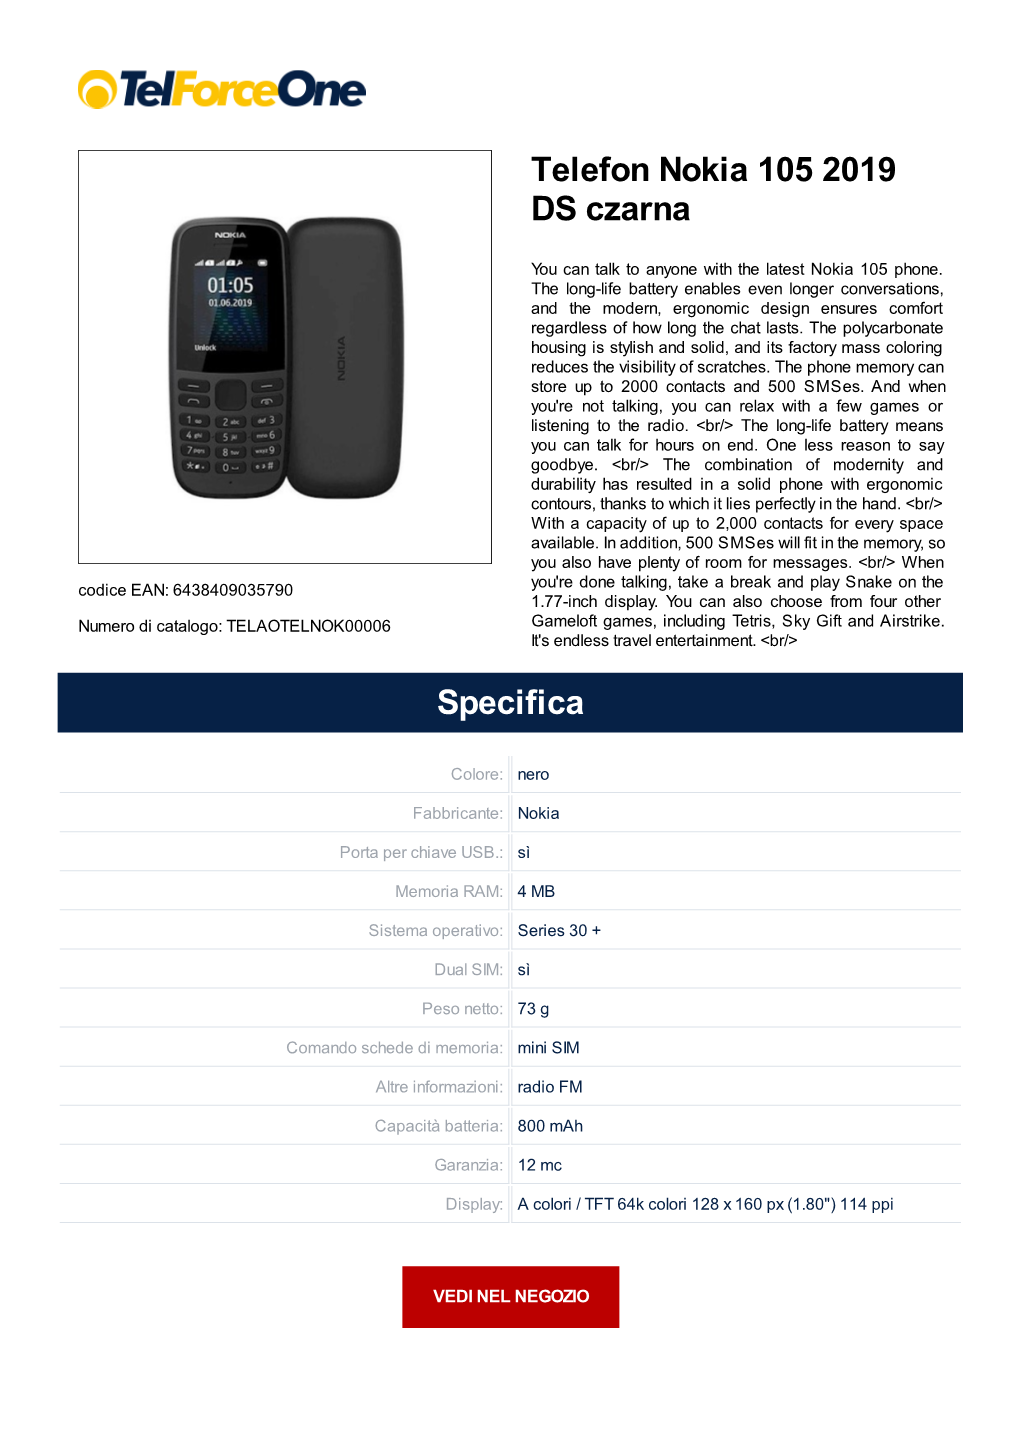 Telefon Nokia 105 2019 DS Czarna Specifica